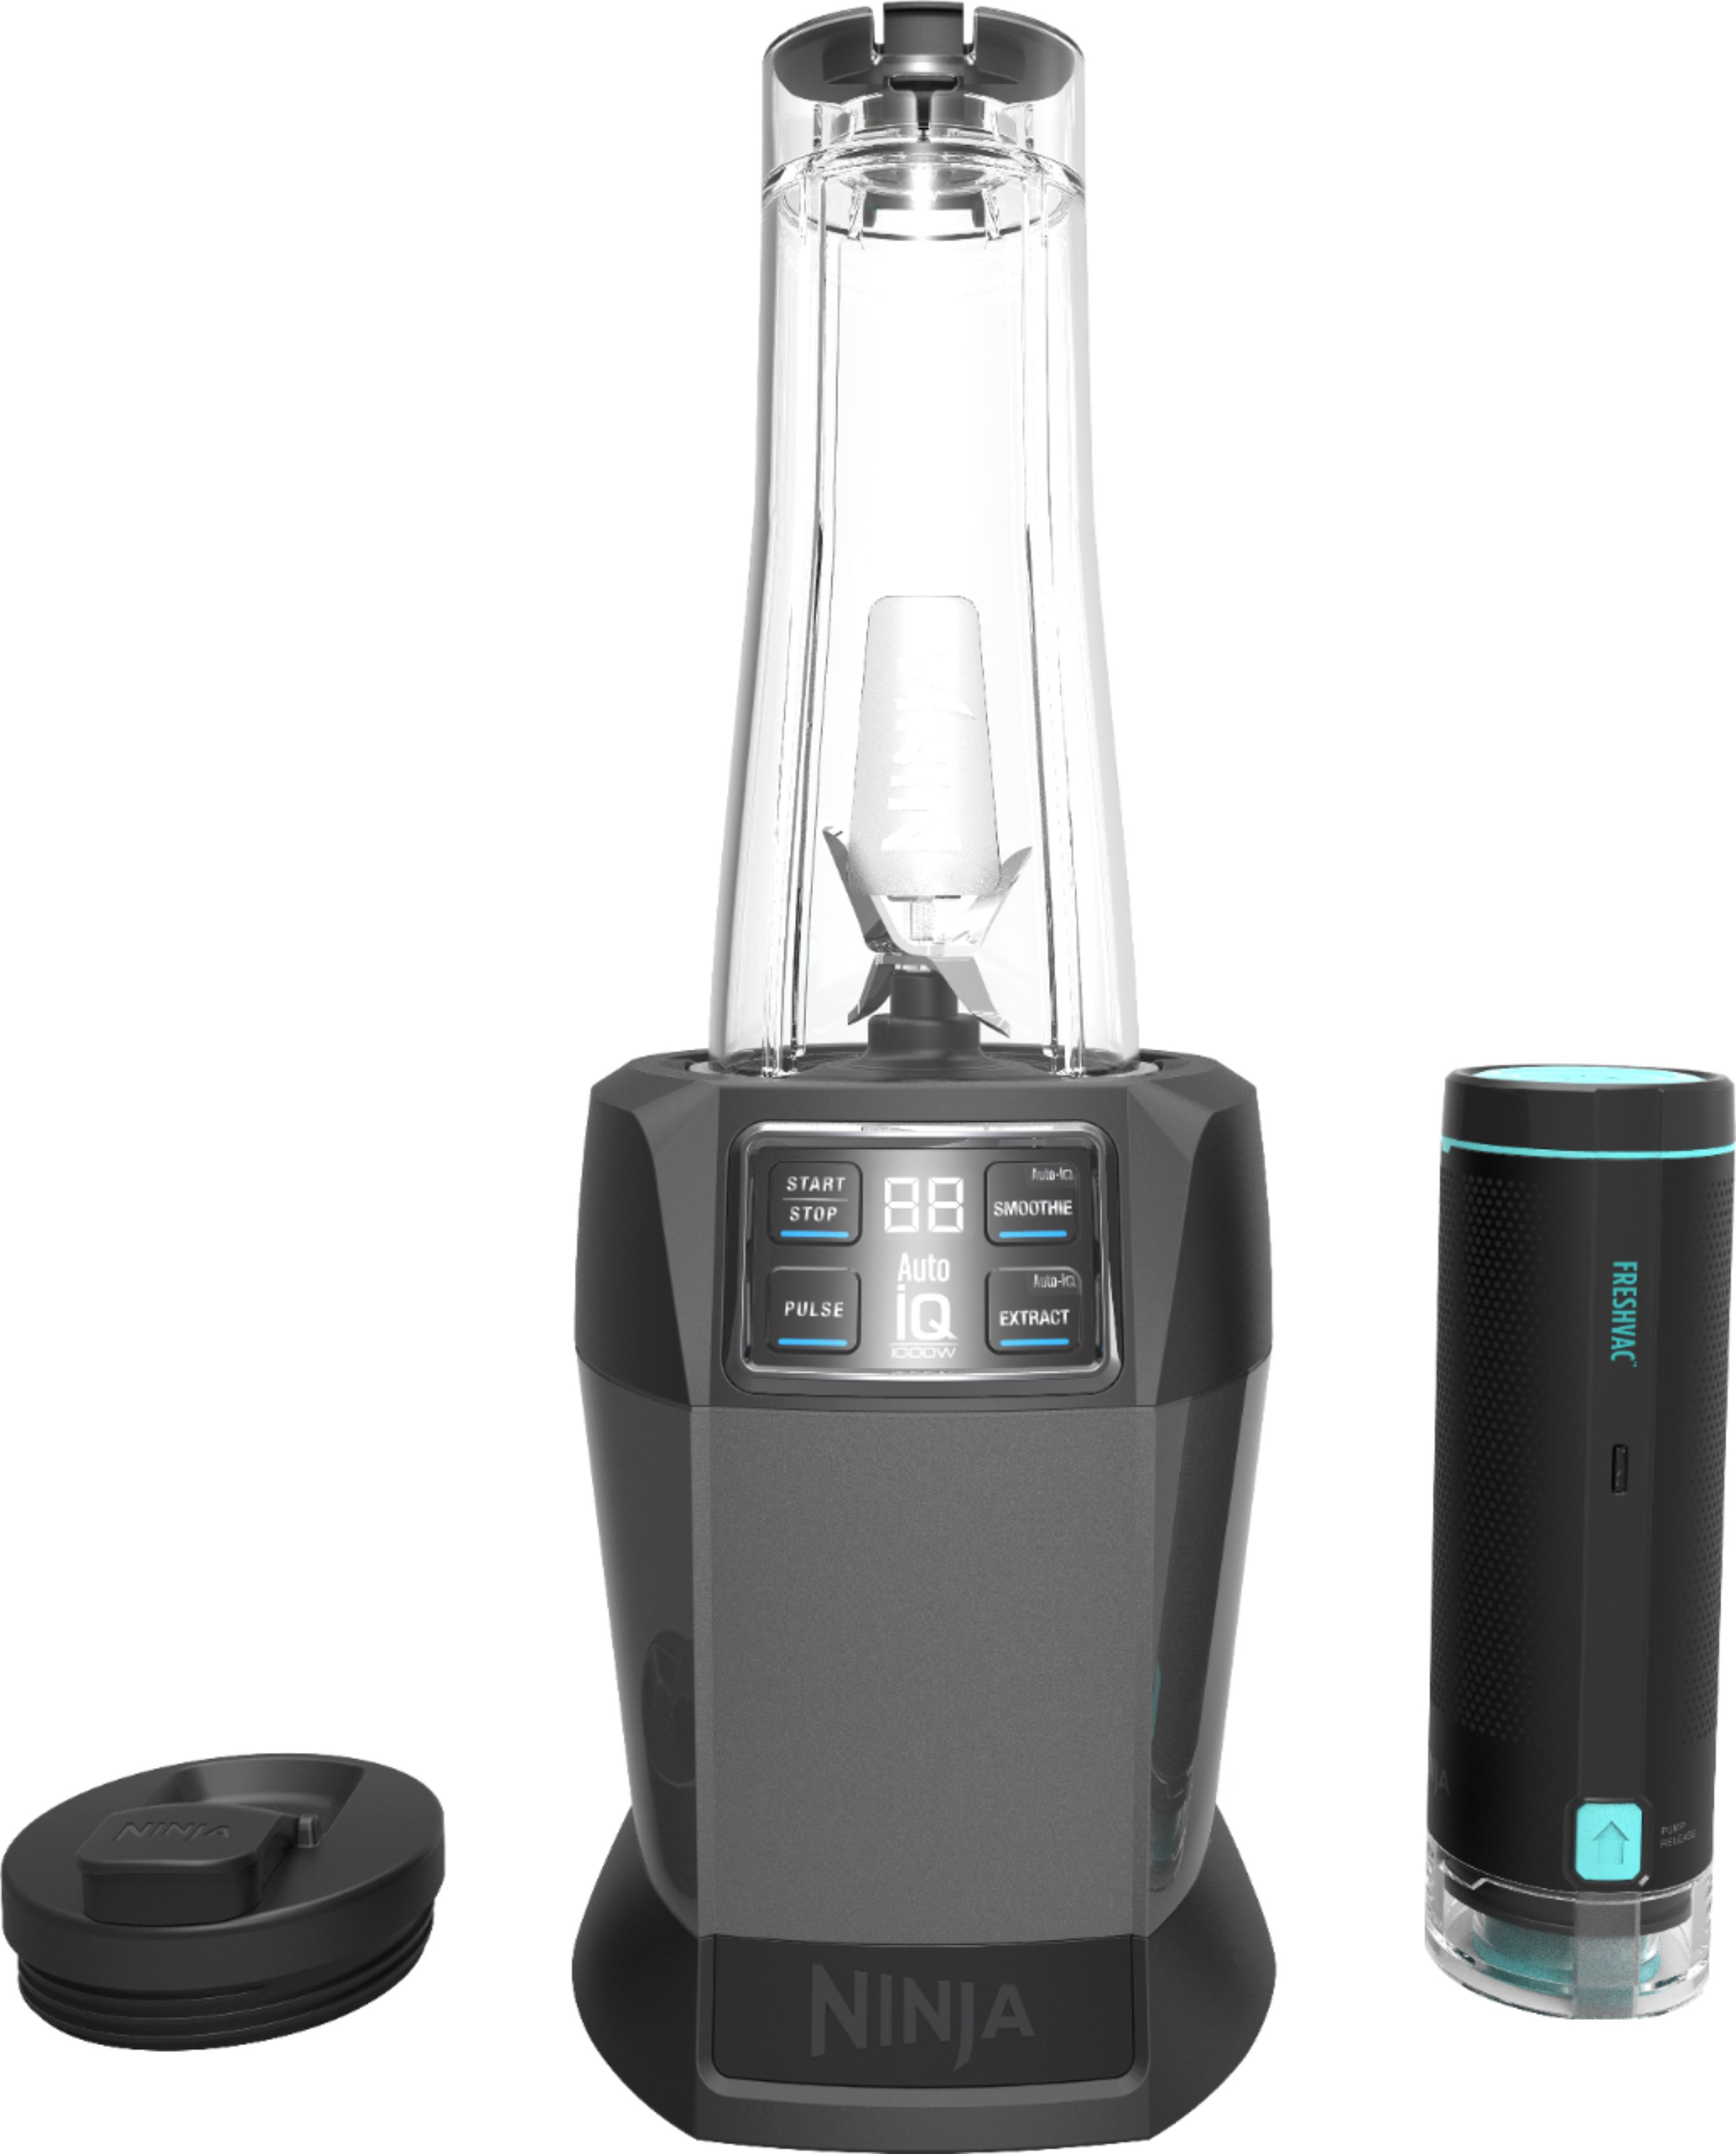 Ninja Nutri-Blender Plus-900 Watt personal blender with ice crusher, under  $60 for a limited time!  @liketokn…